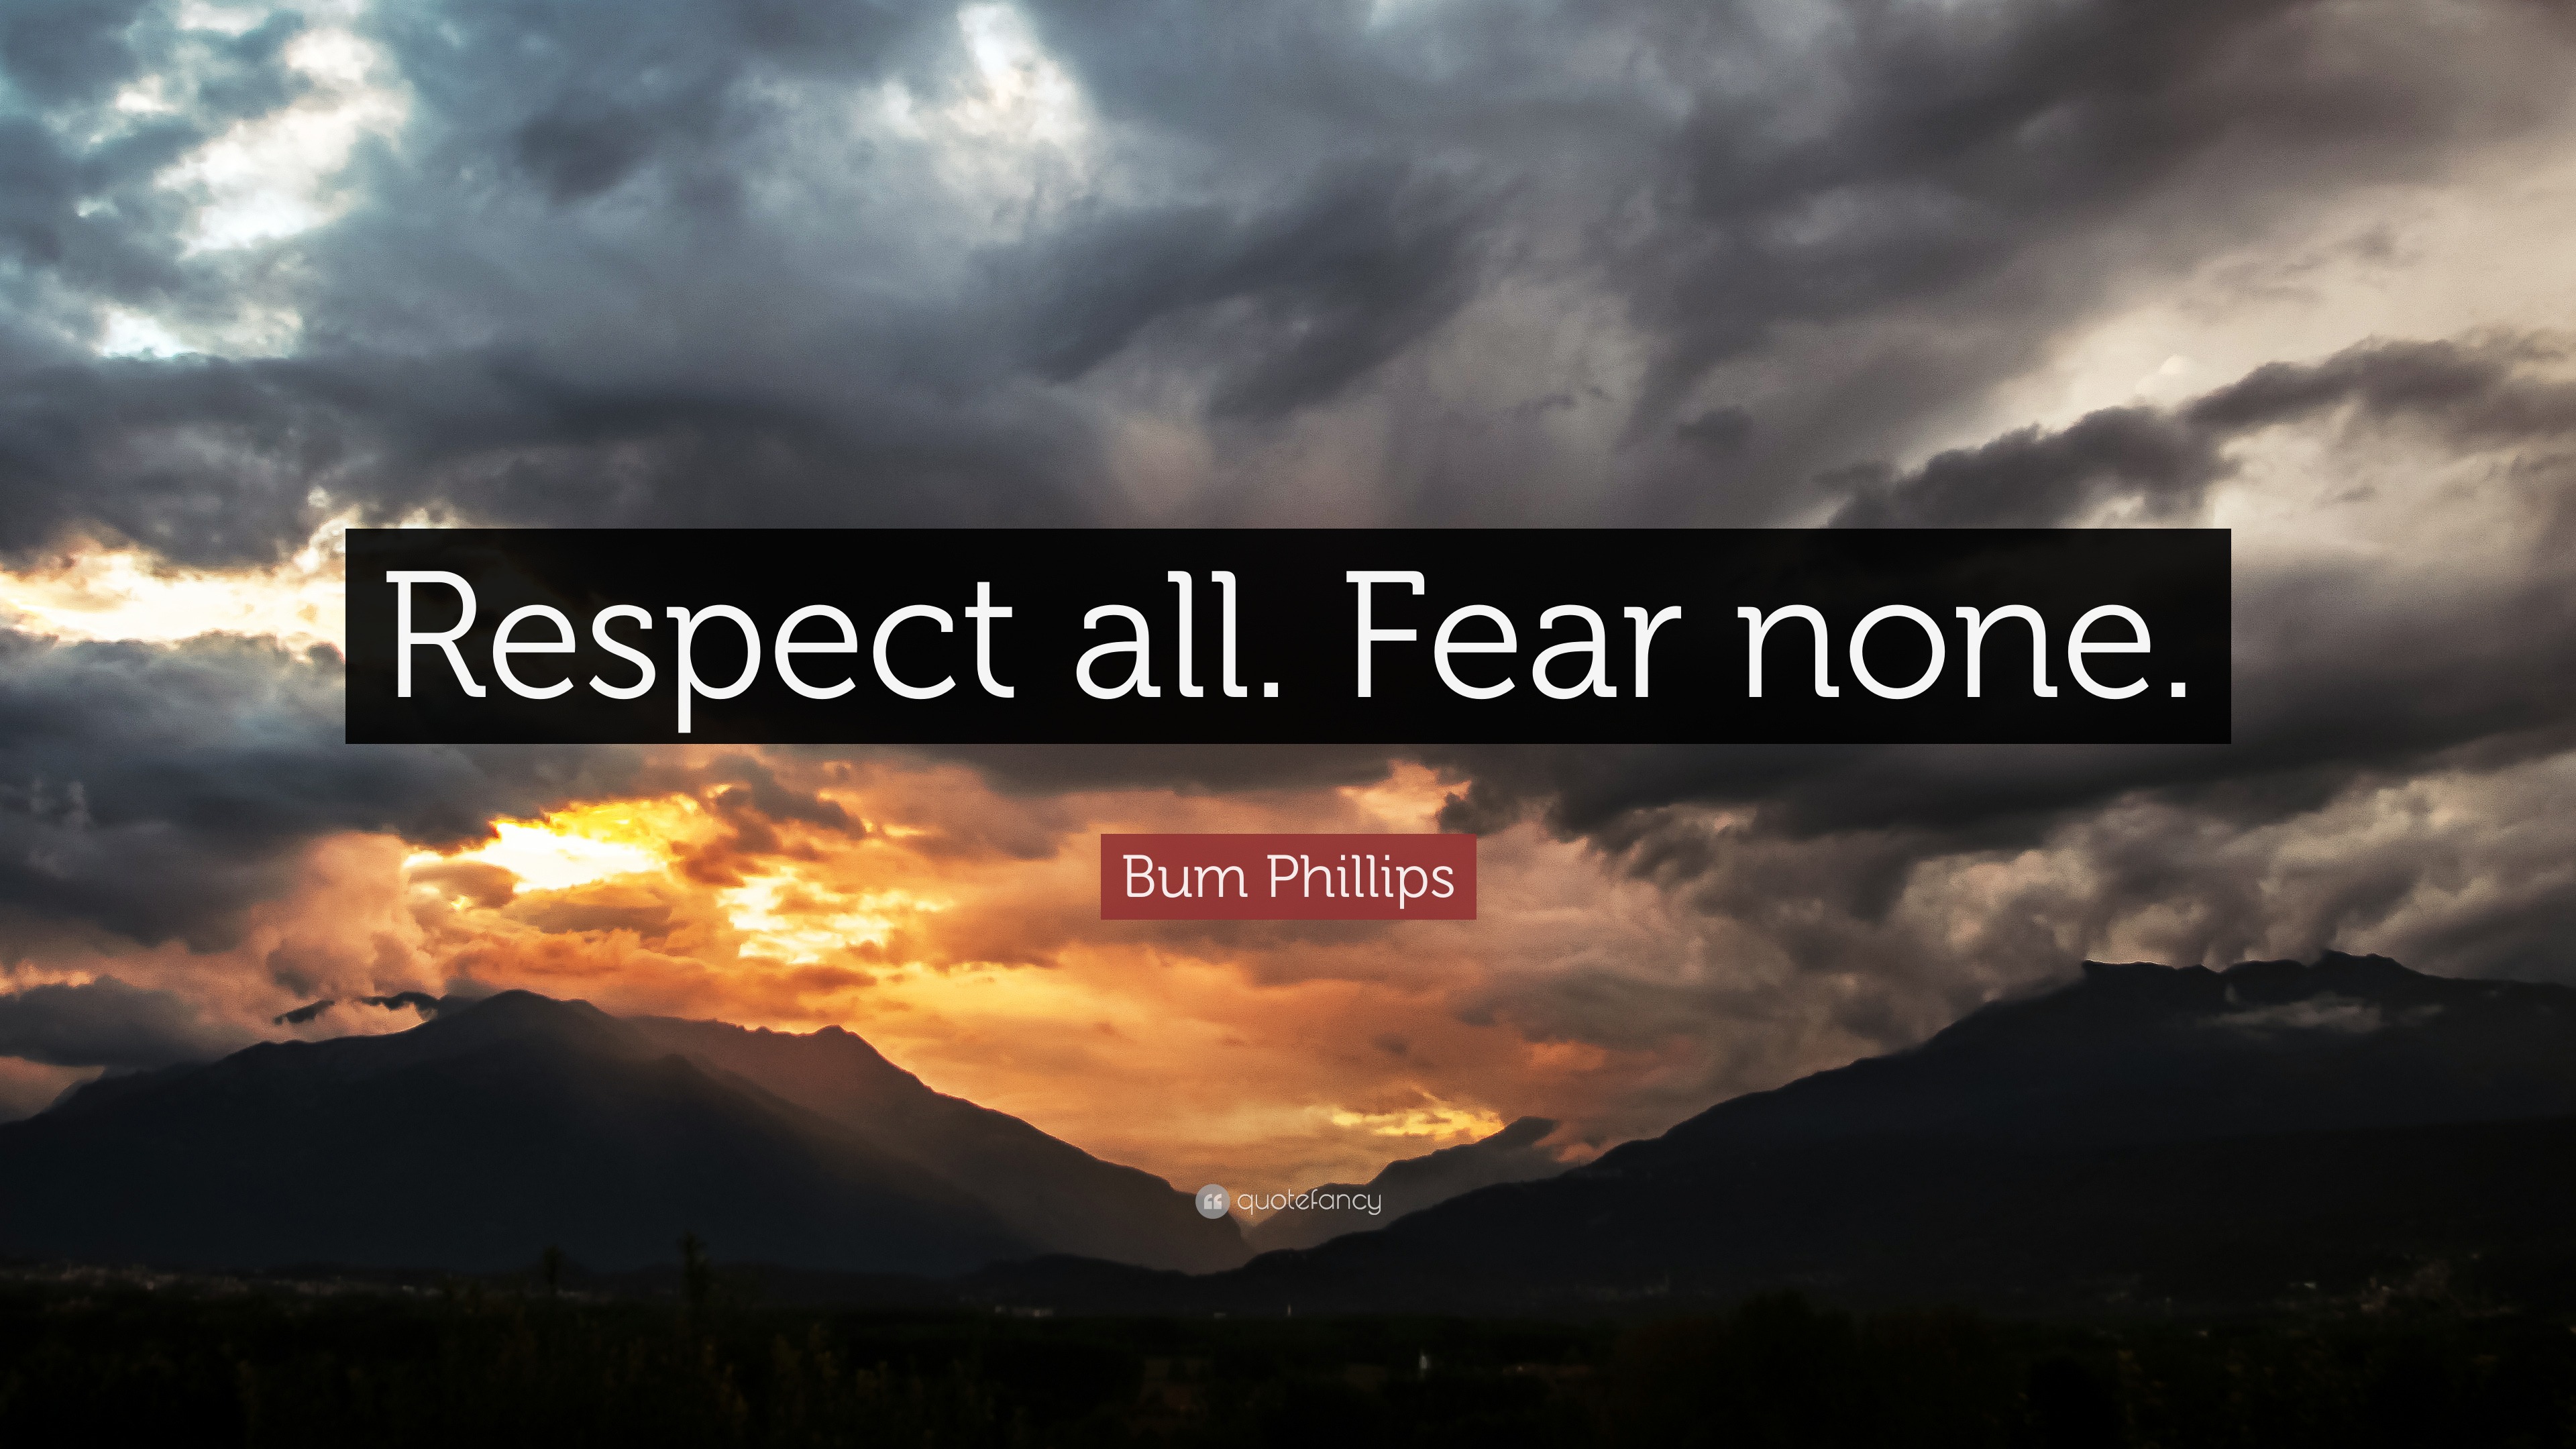 Bum Phillips Quote: "Respect all. 